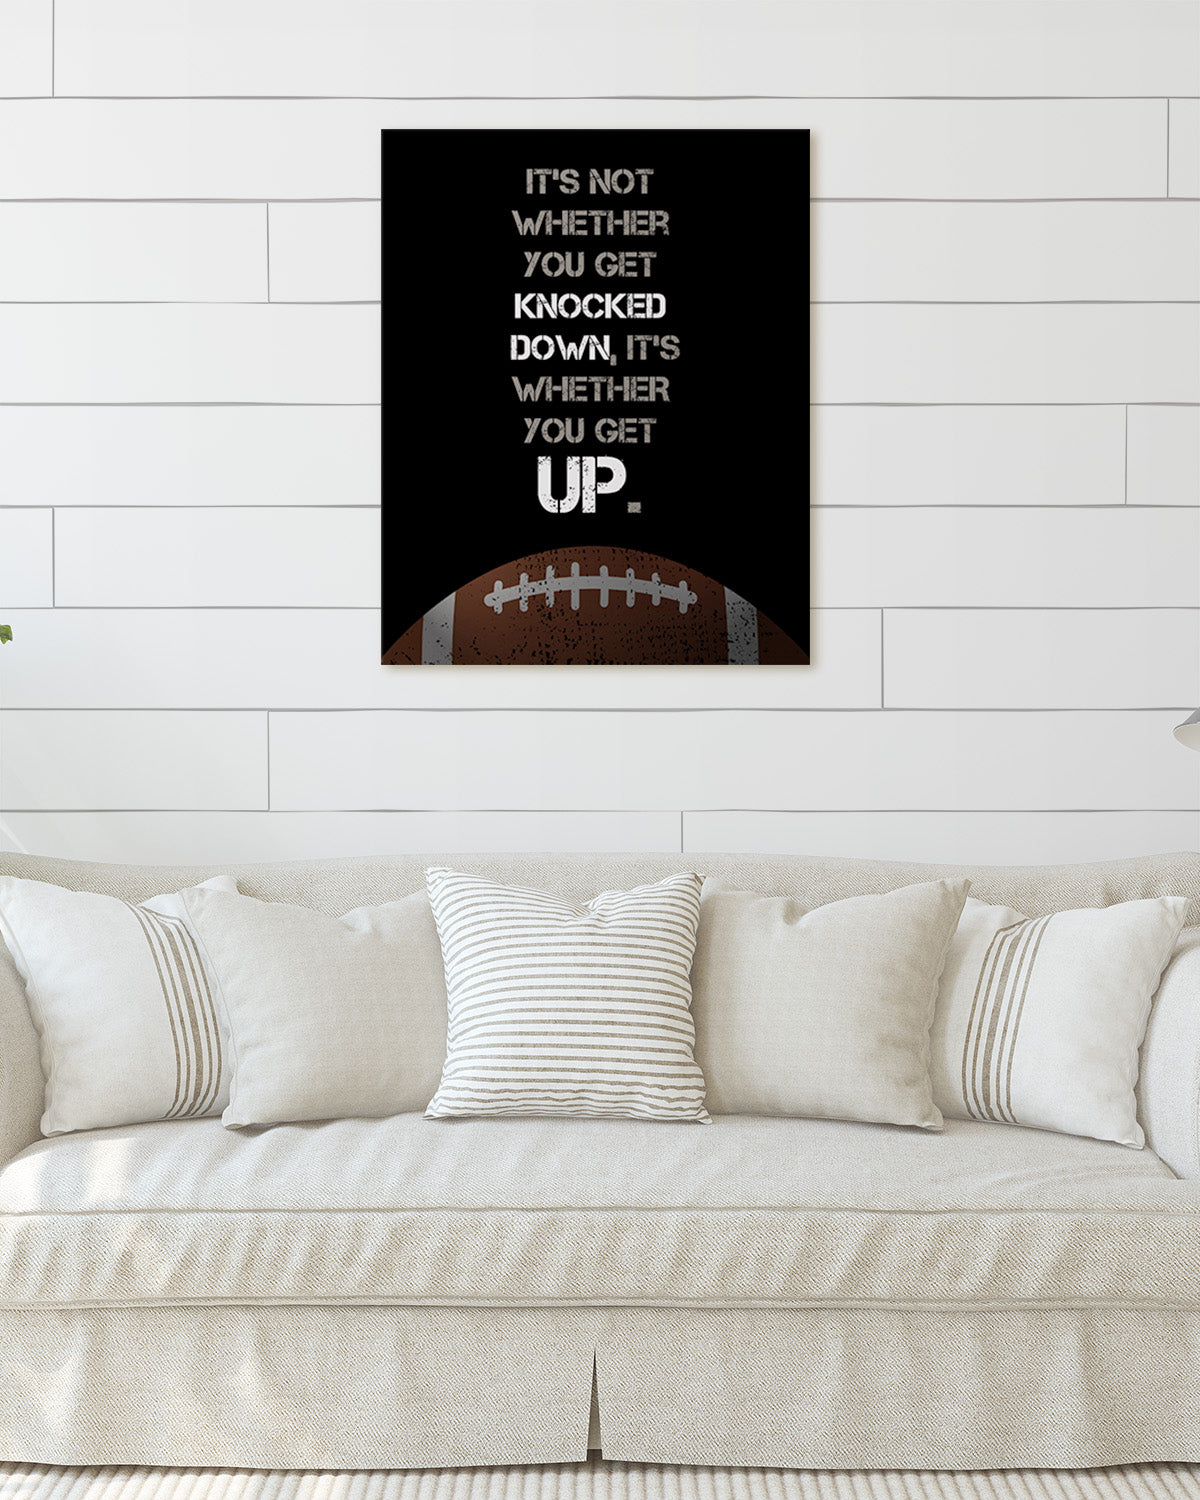 Govivo Football Room Decor - Motivational Football Posters, Canvas or Prints - Football Wall Art for Boys Bedroom, Locker Room, or Coach Gift - Inspirational Football Quotes